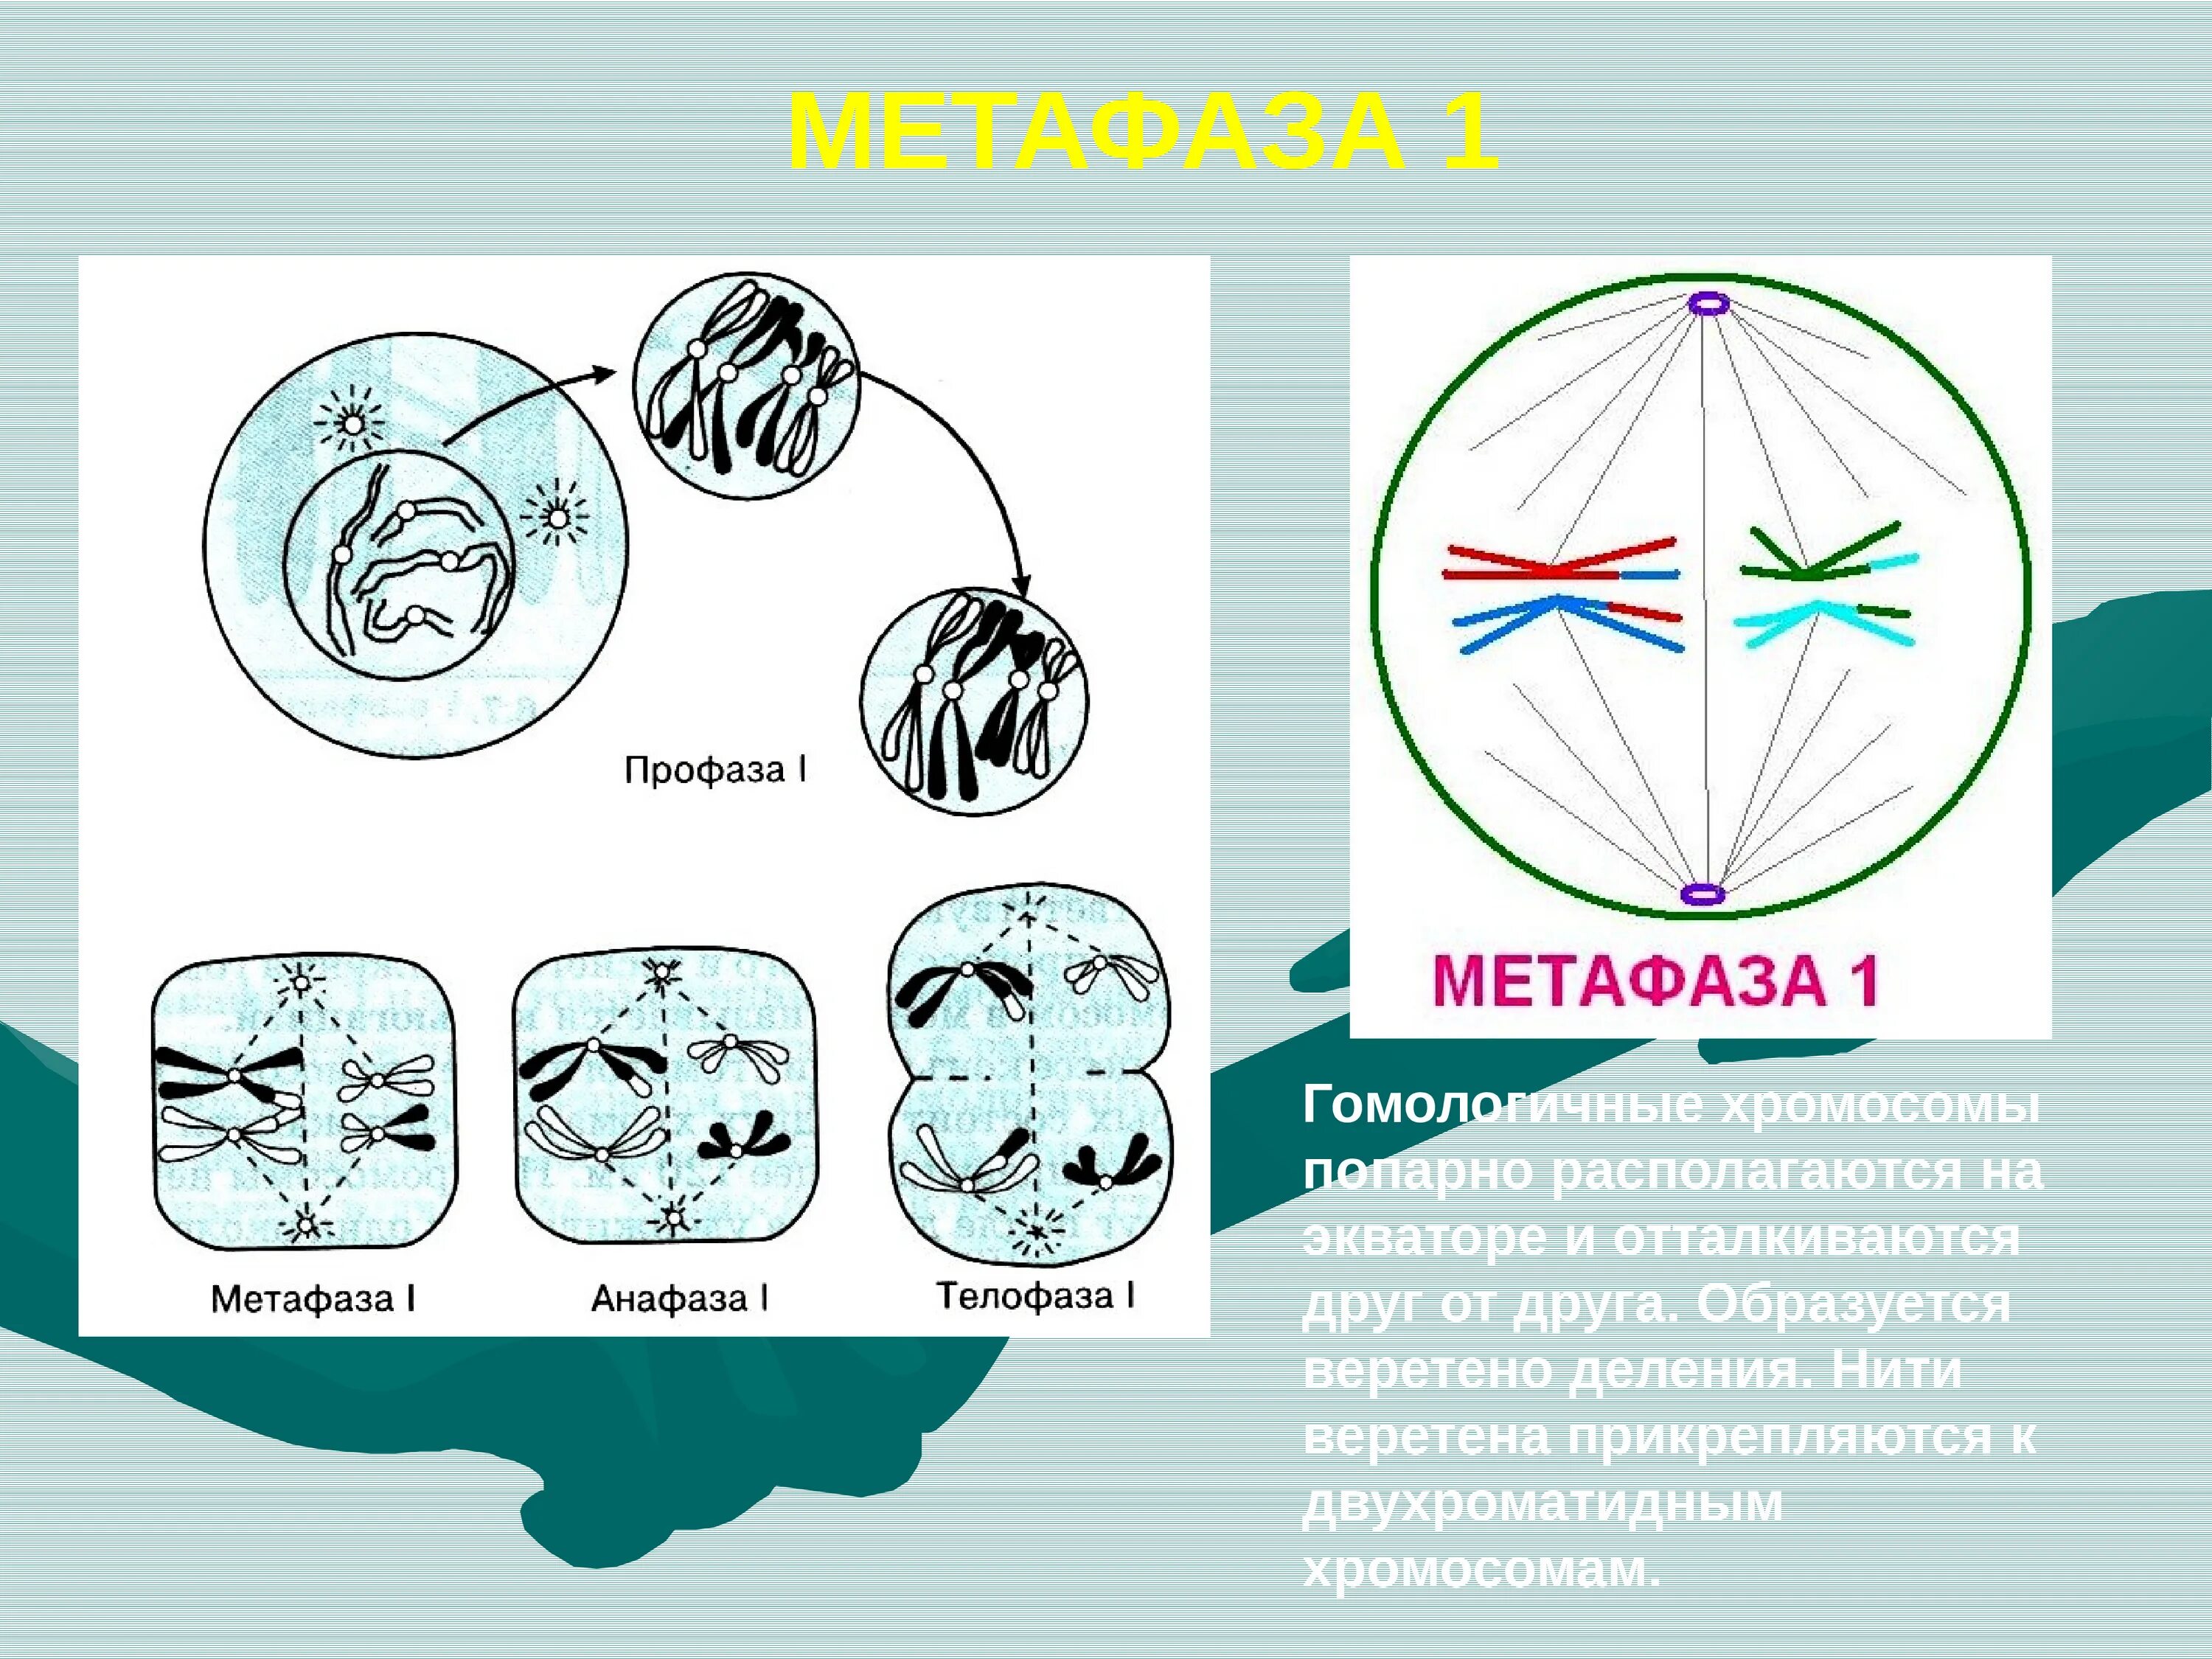 Спирализация хромосом фазы митоза. Метафаза мейоза 2. Метафаза нити веретена деления. Метафаза мейоза 1. Метафаза Веретено деления.